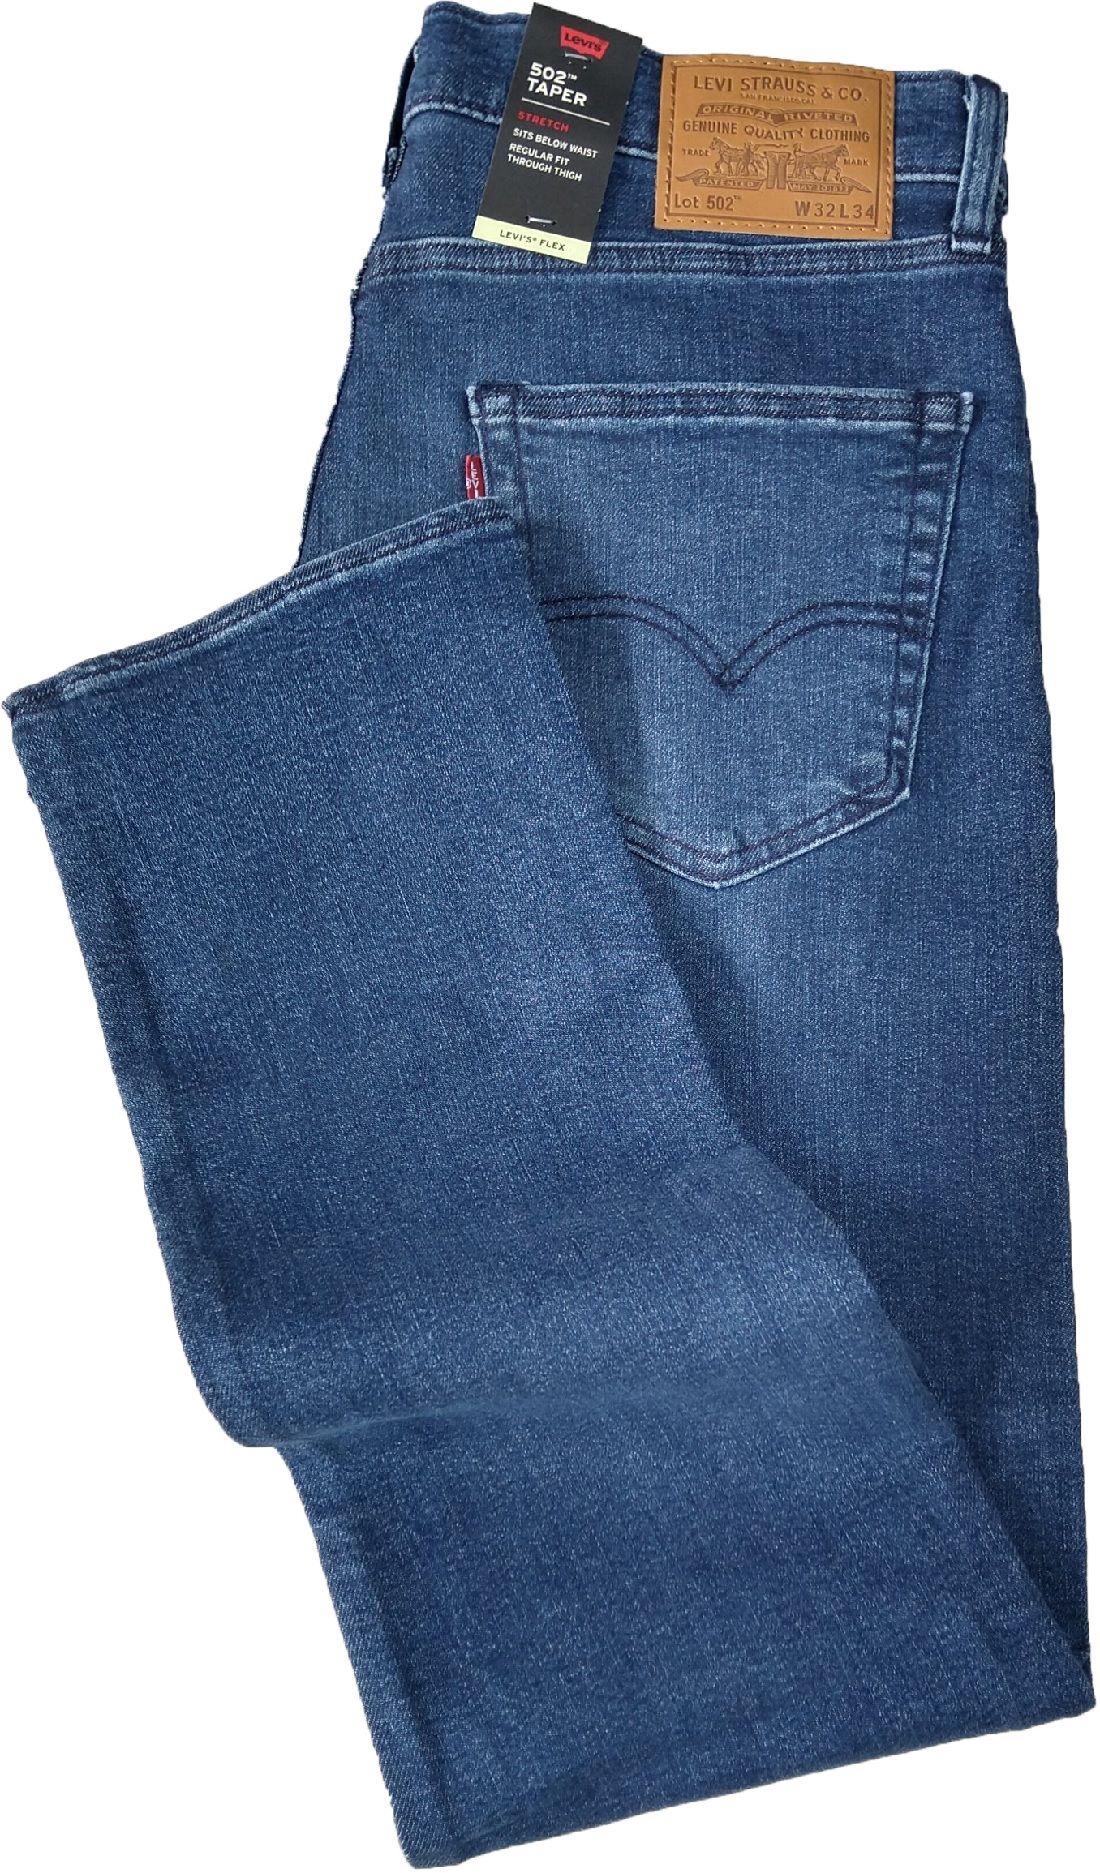 Calça Jeans Levis Masculina - Ref. 502-0649 Regular Taper - Boca Fina -  FIDALGOS